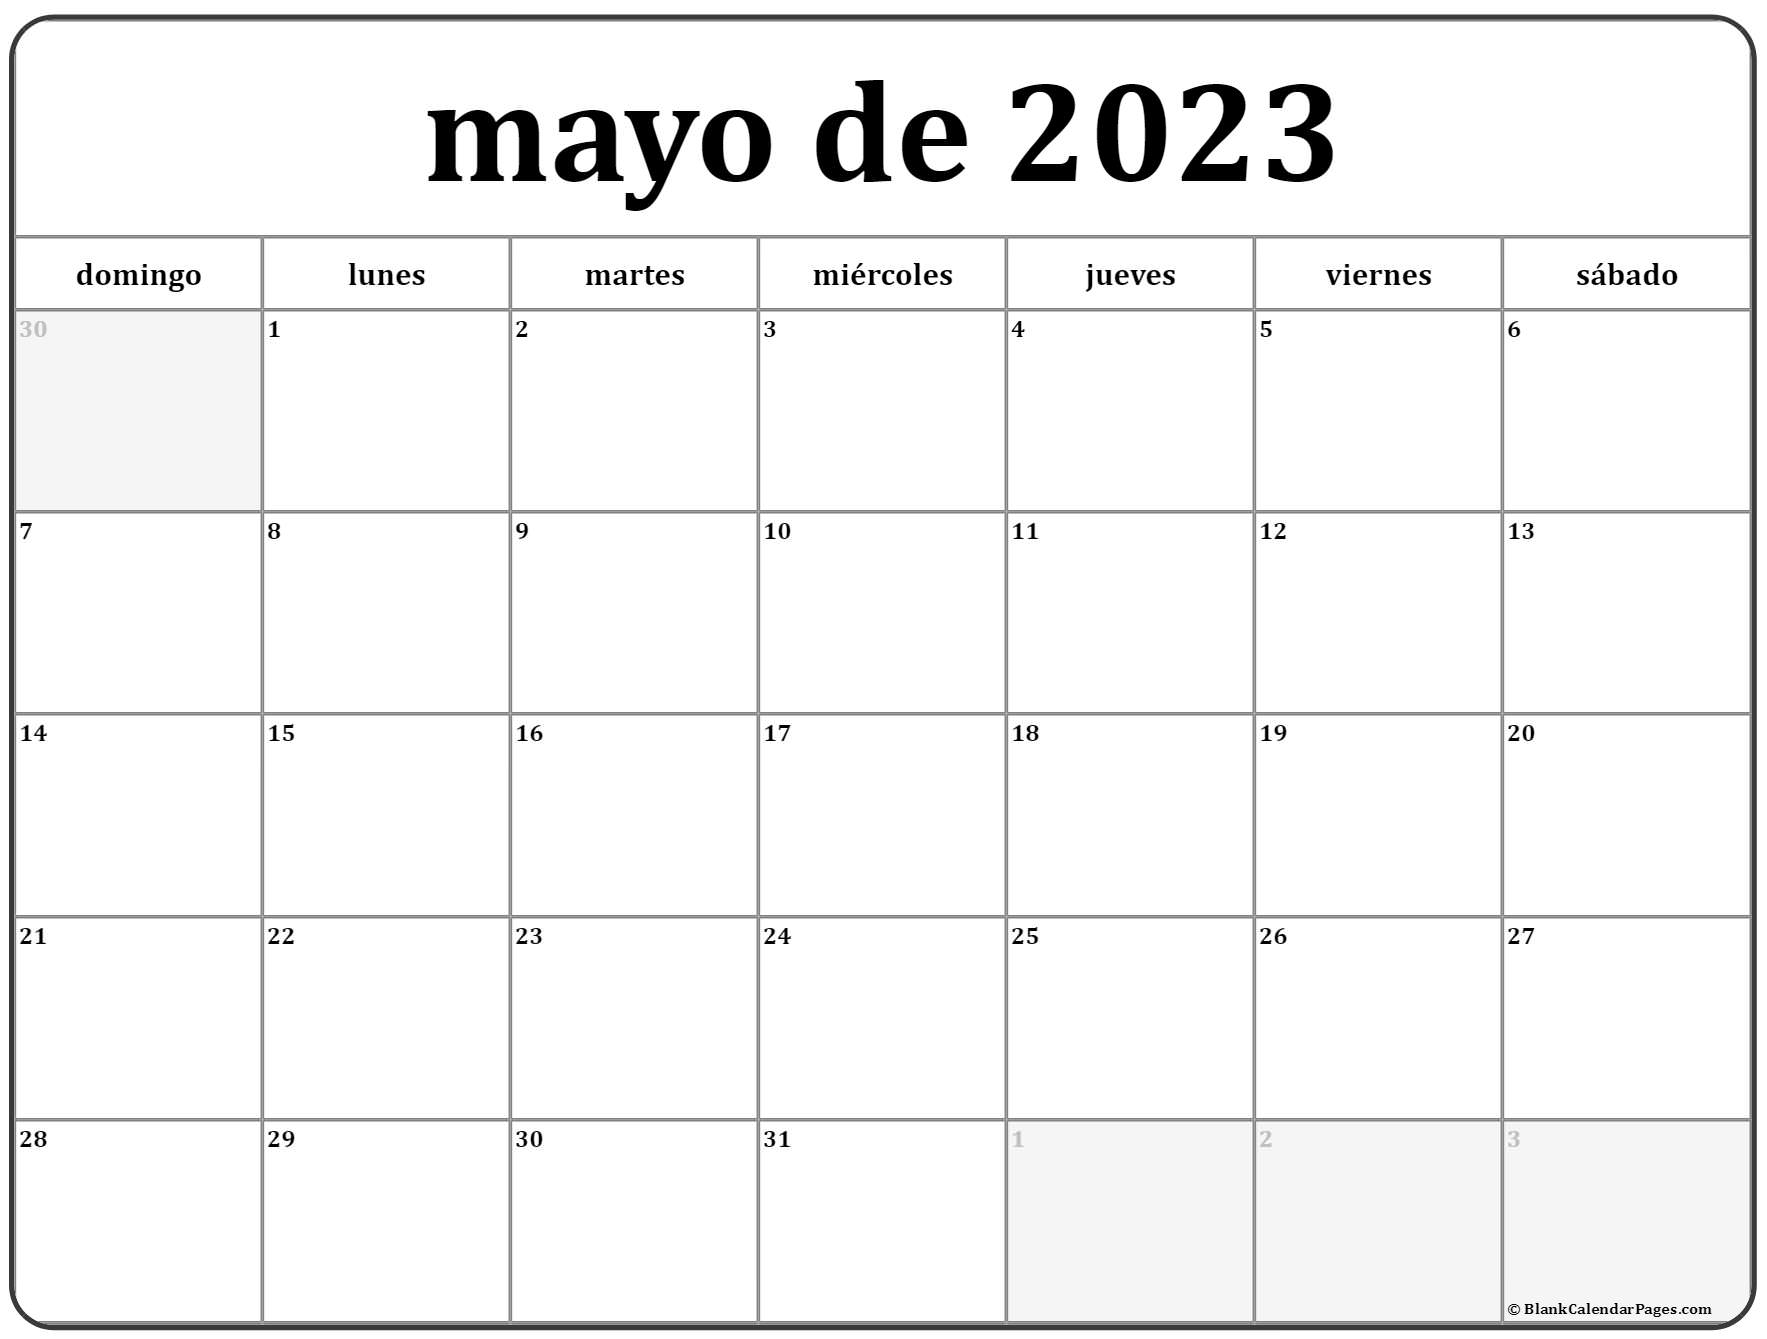 Calendario Mayo De 2023 mayo de 2023 calendario gratis | Calendario mayo